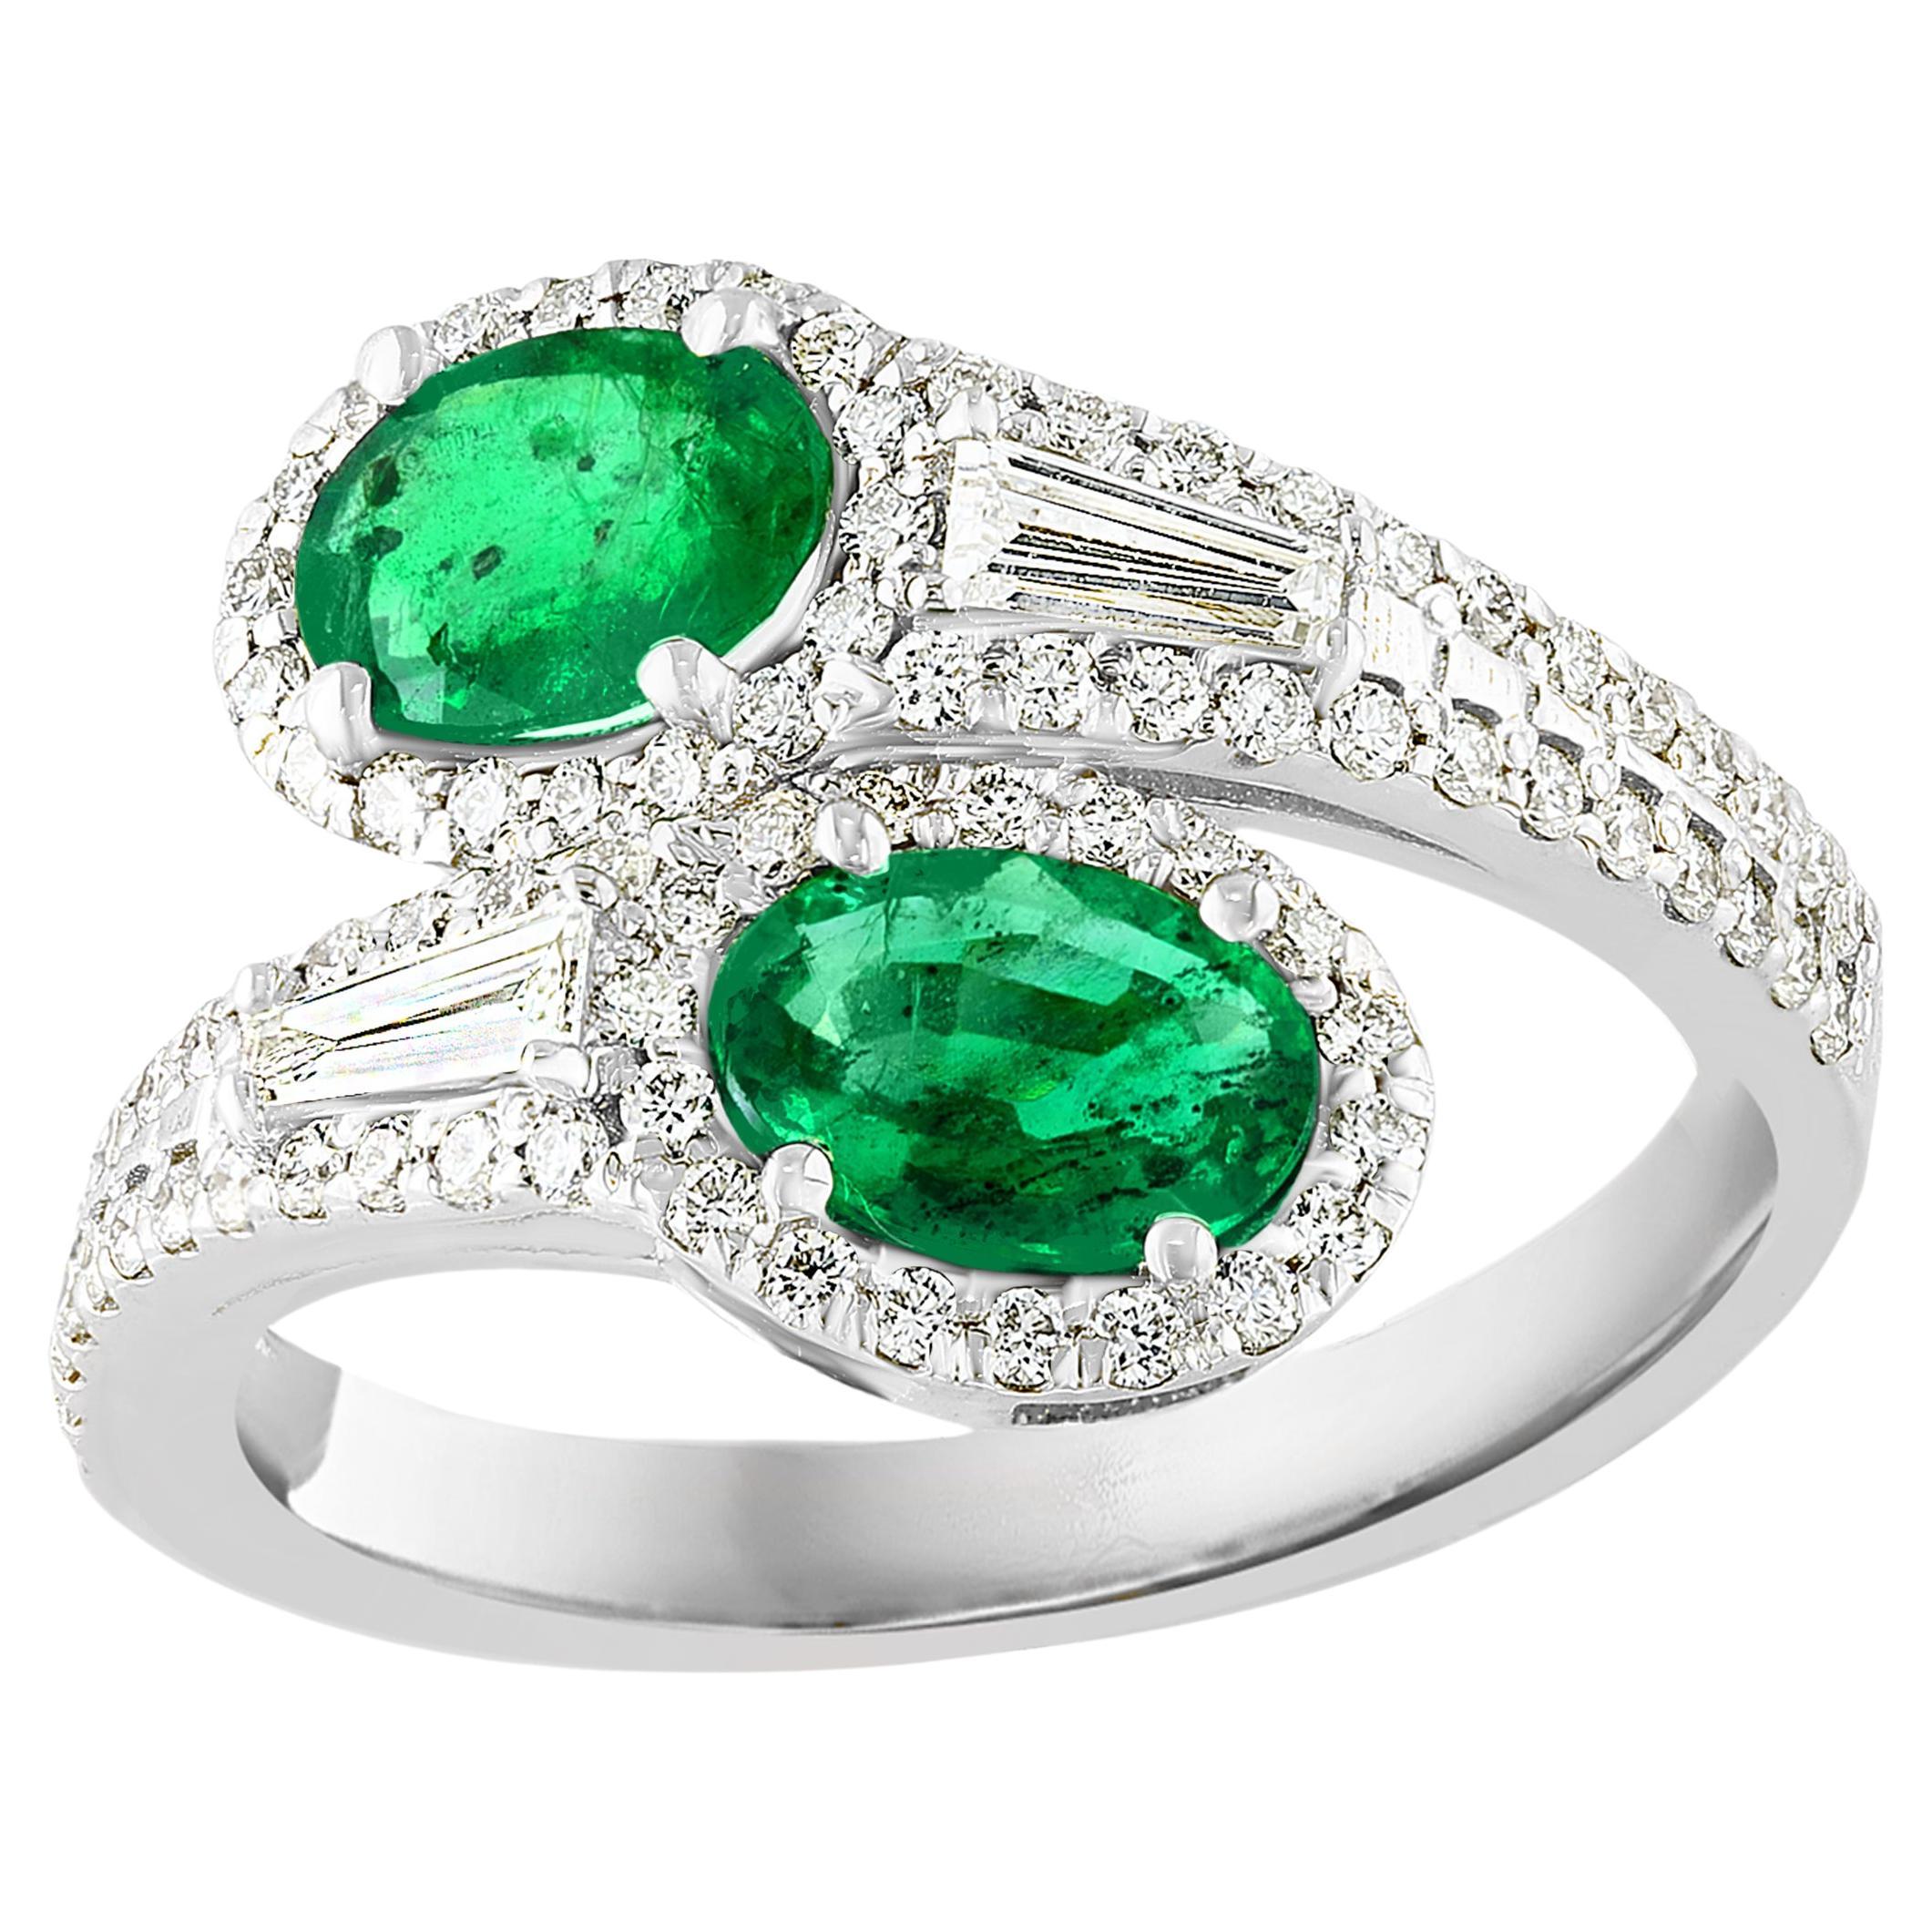 1.52 Carat Oval Cut Emerald Diamond Toi et Moi Engagement Ring 14K White Gold